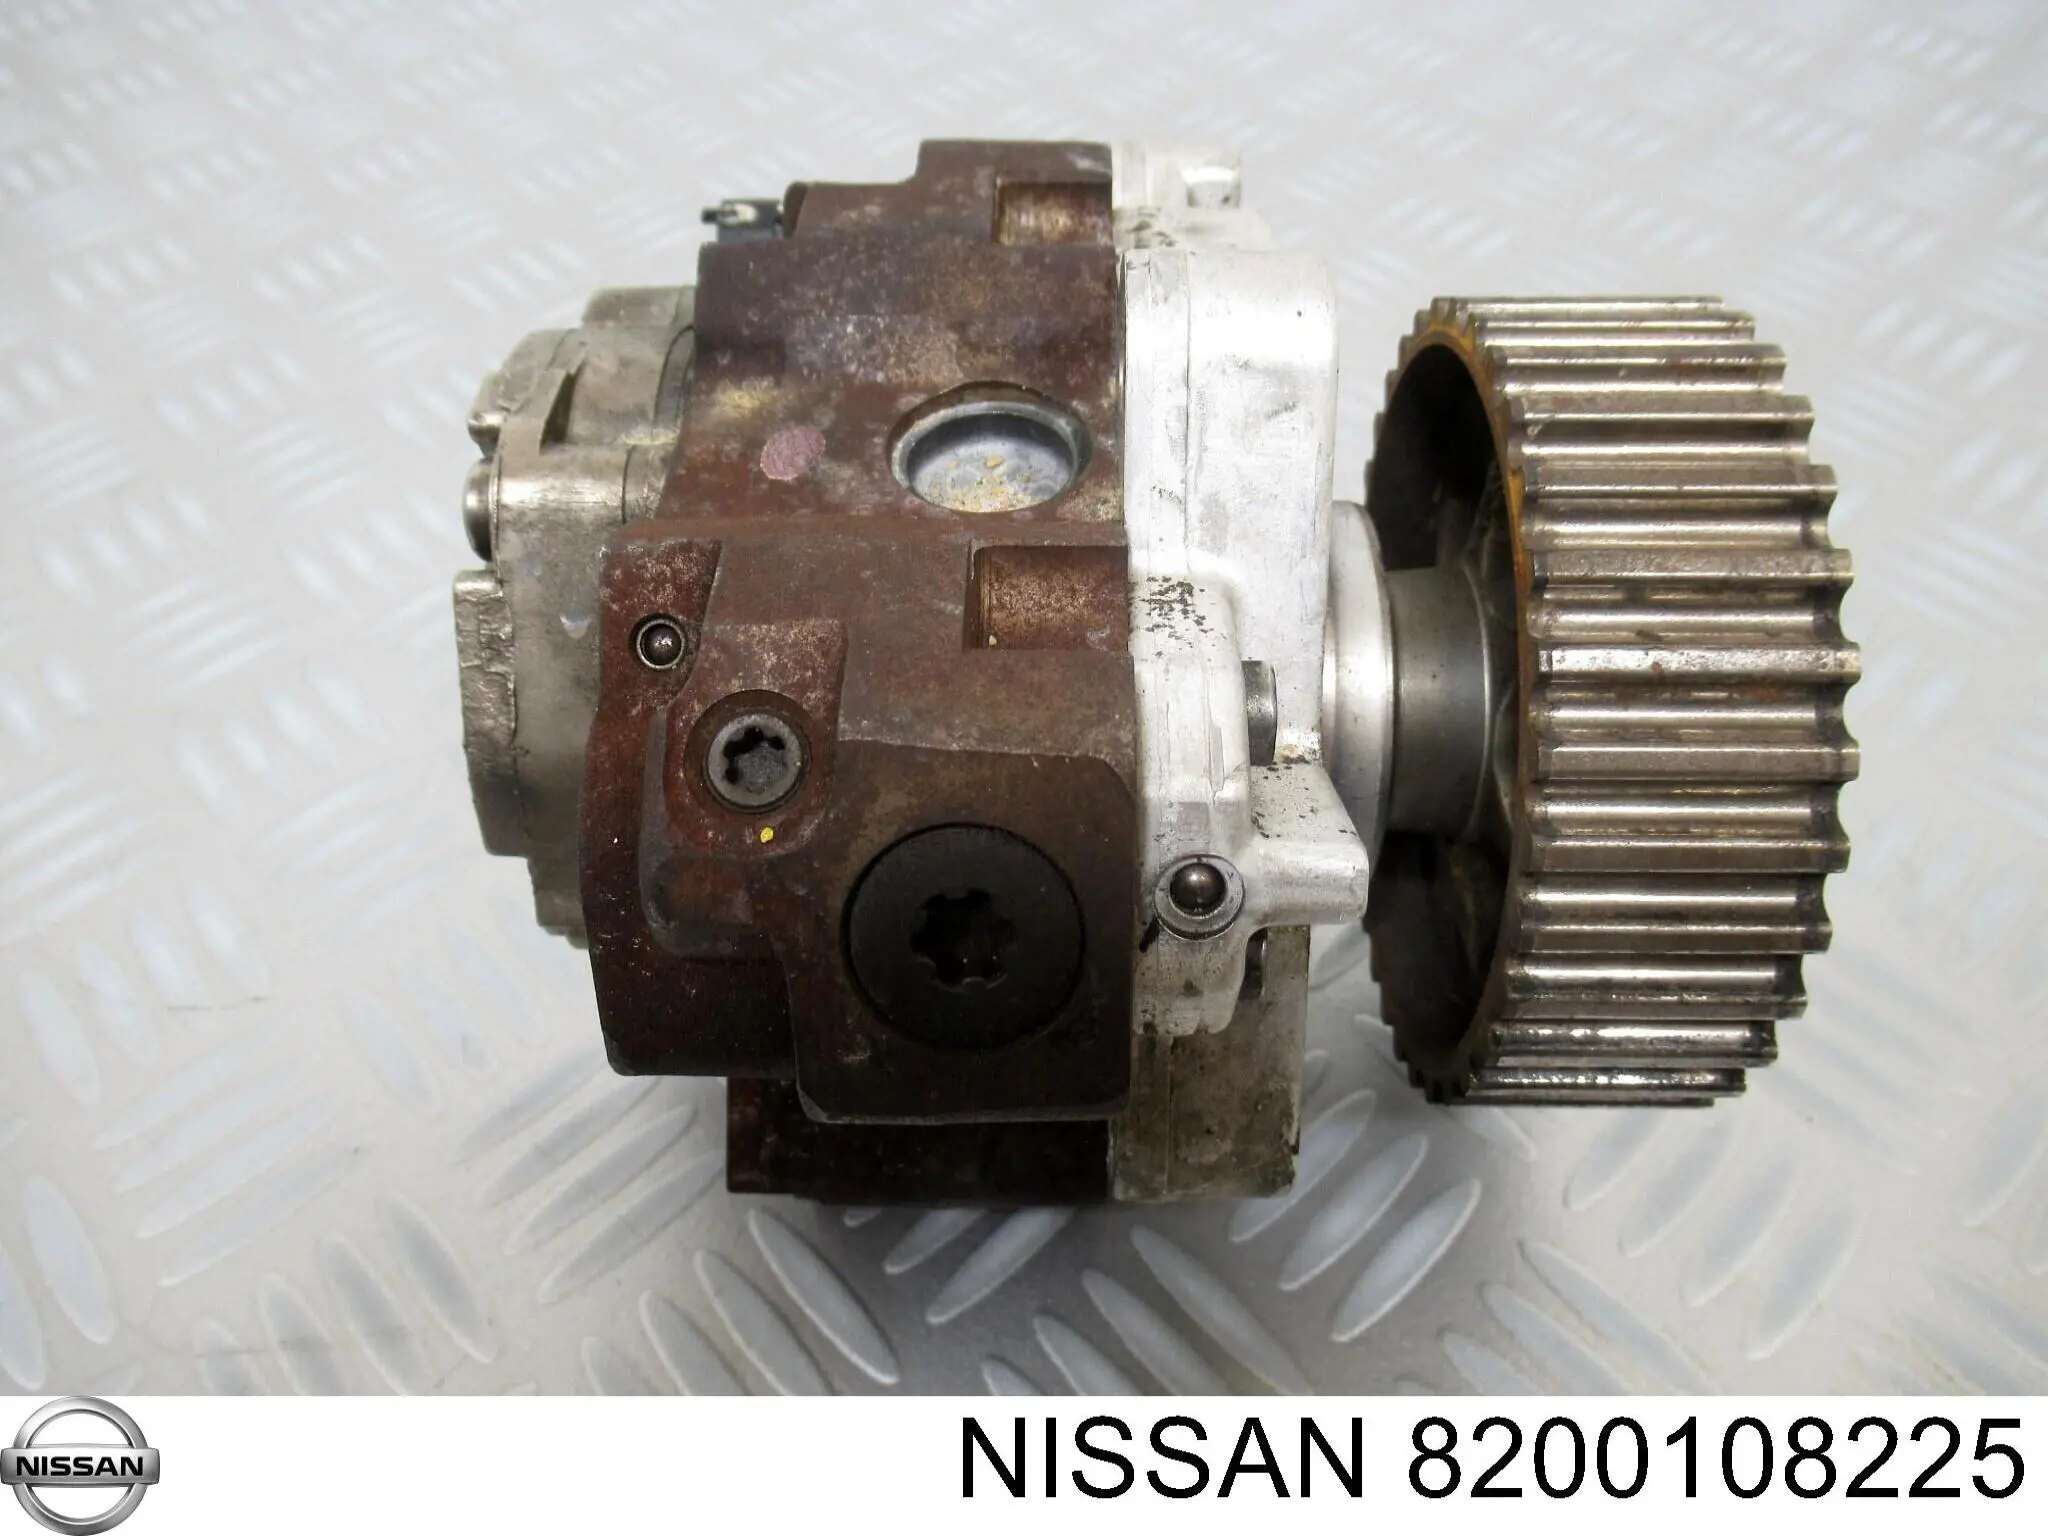 8200108225 Nissan bomba inyectora